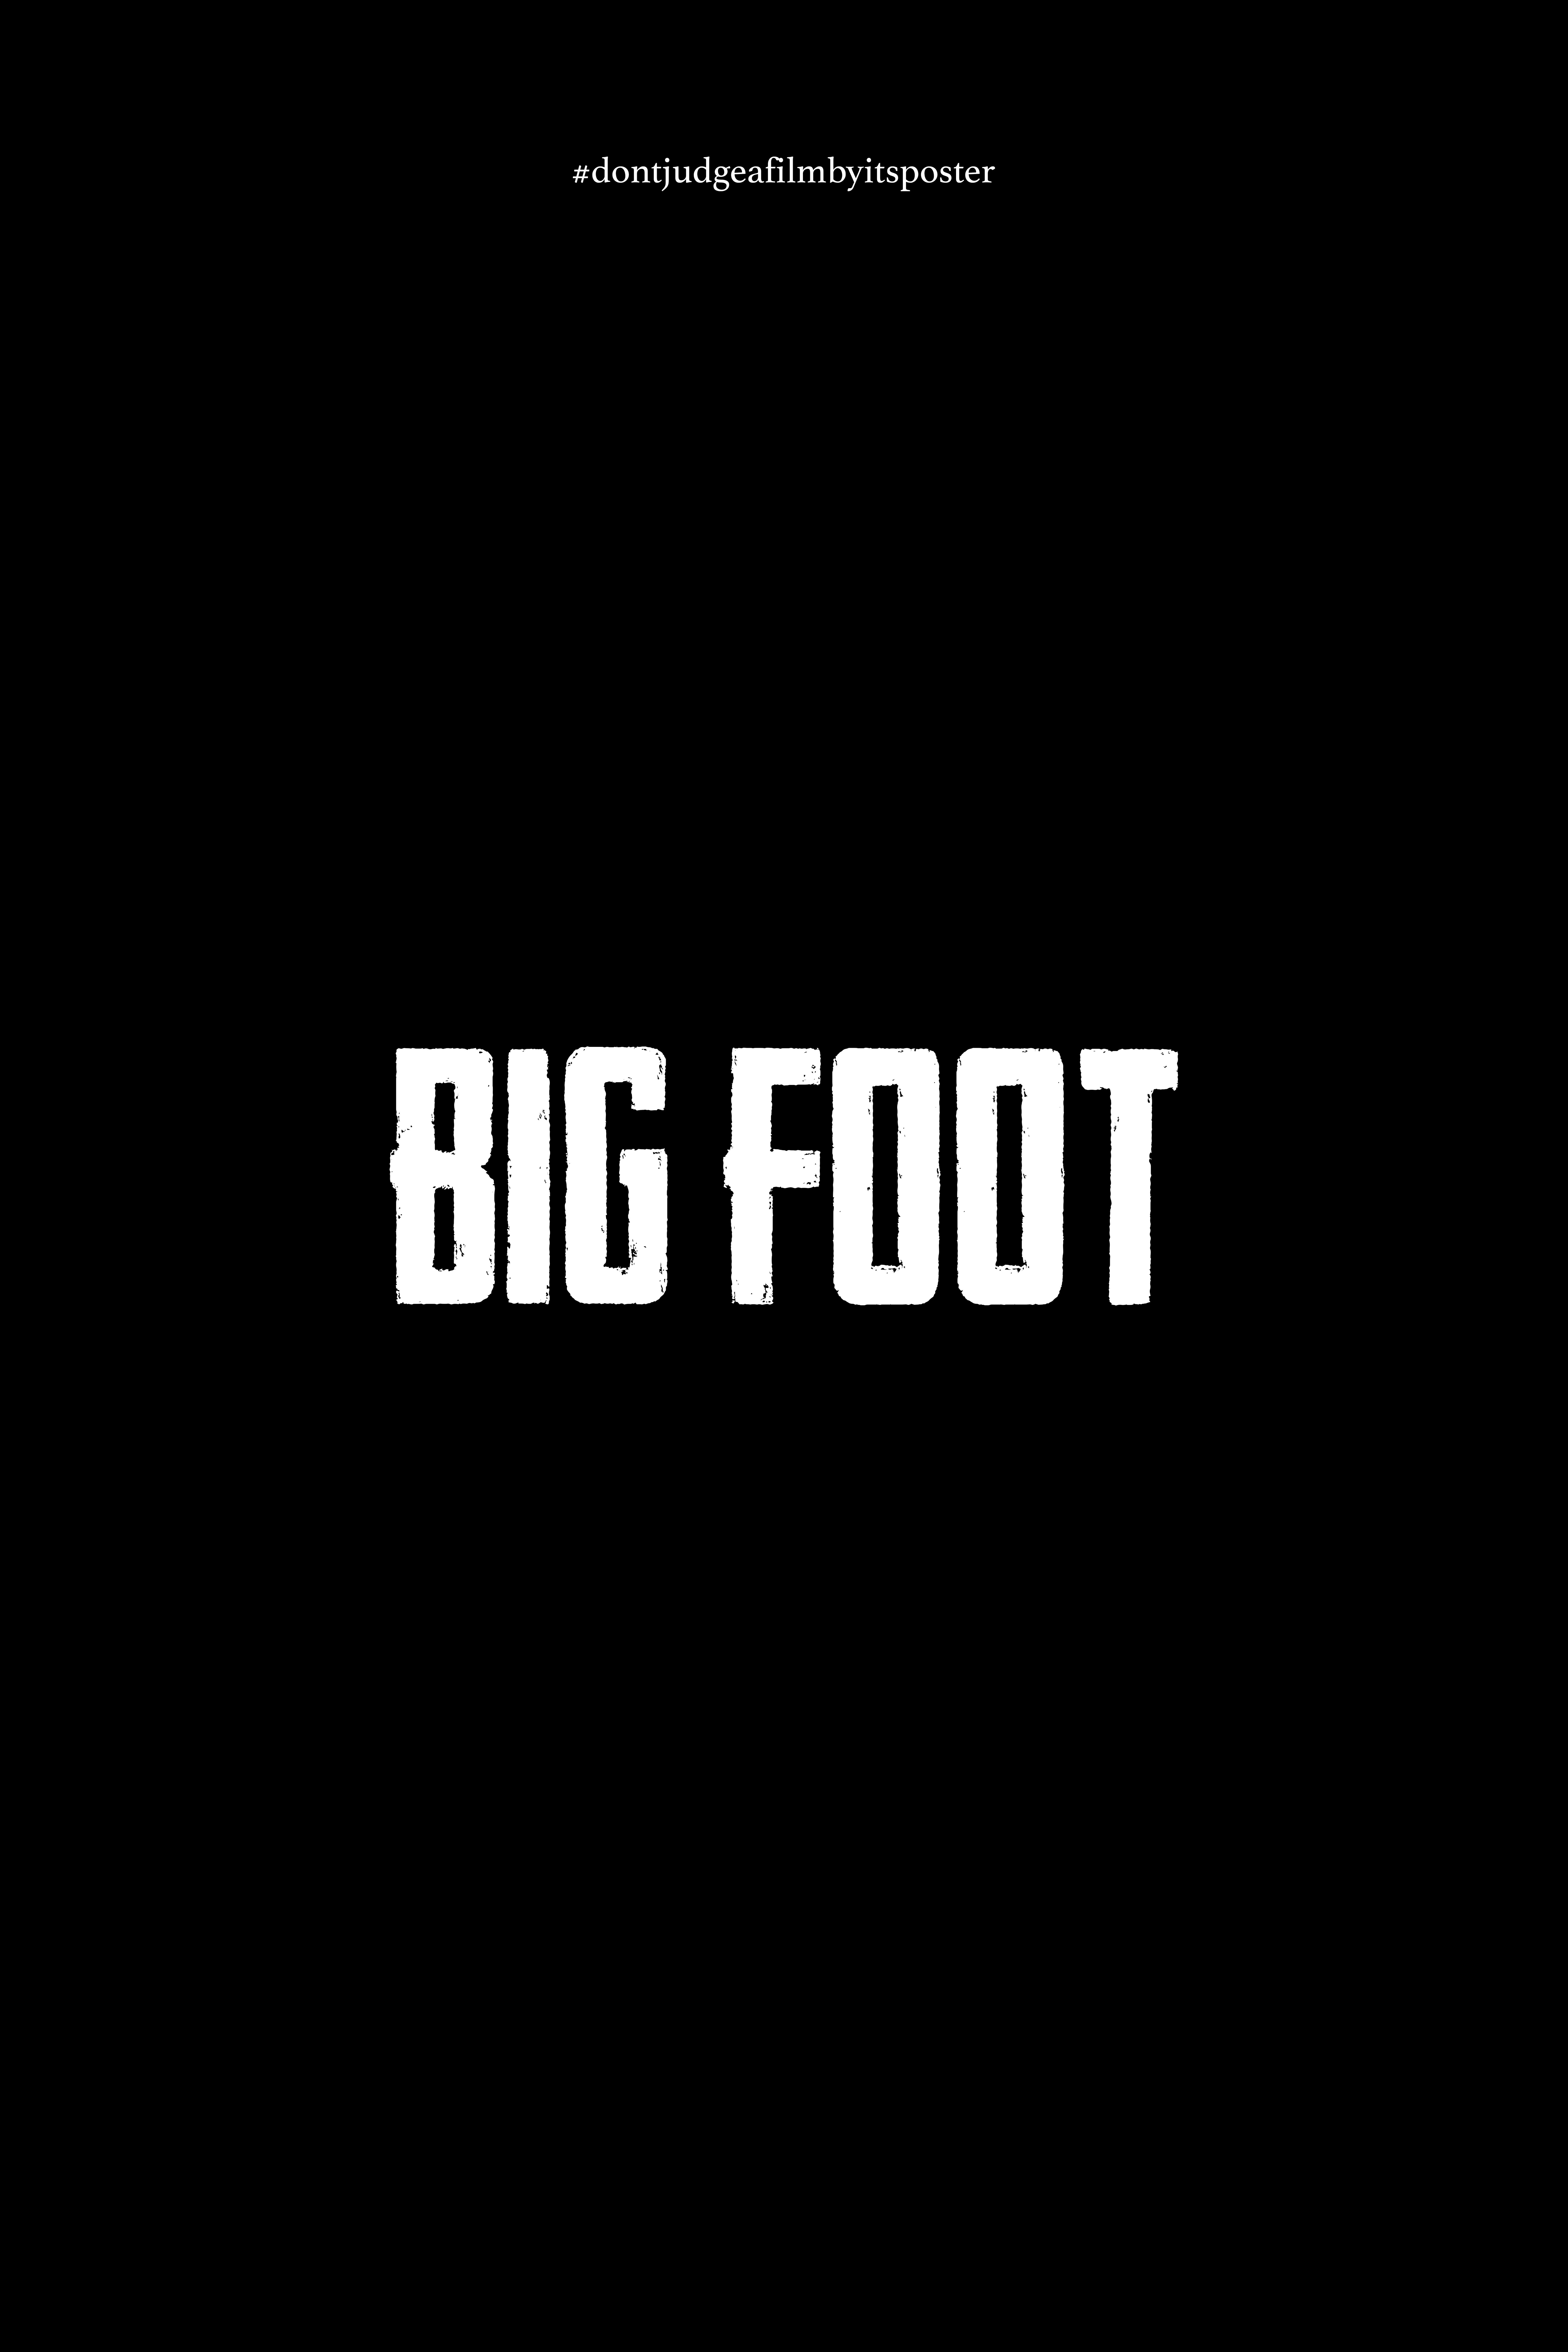 Nonton film Brutal Bigfoot layarkaca21 indoxx1 ganool online streaming terbaru